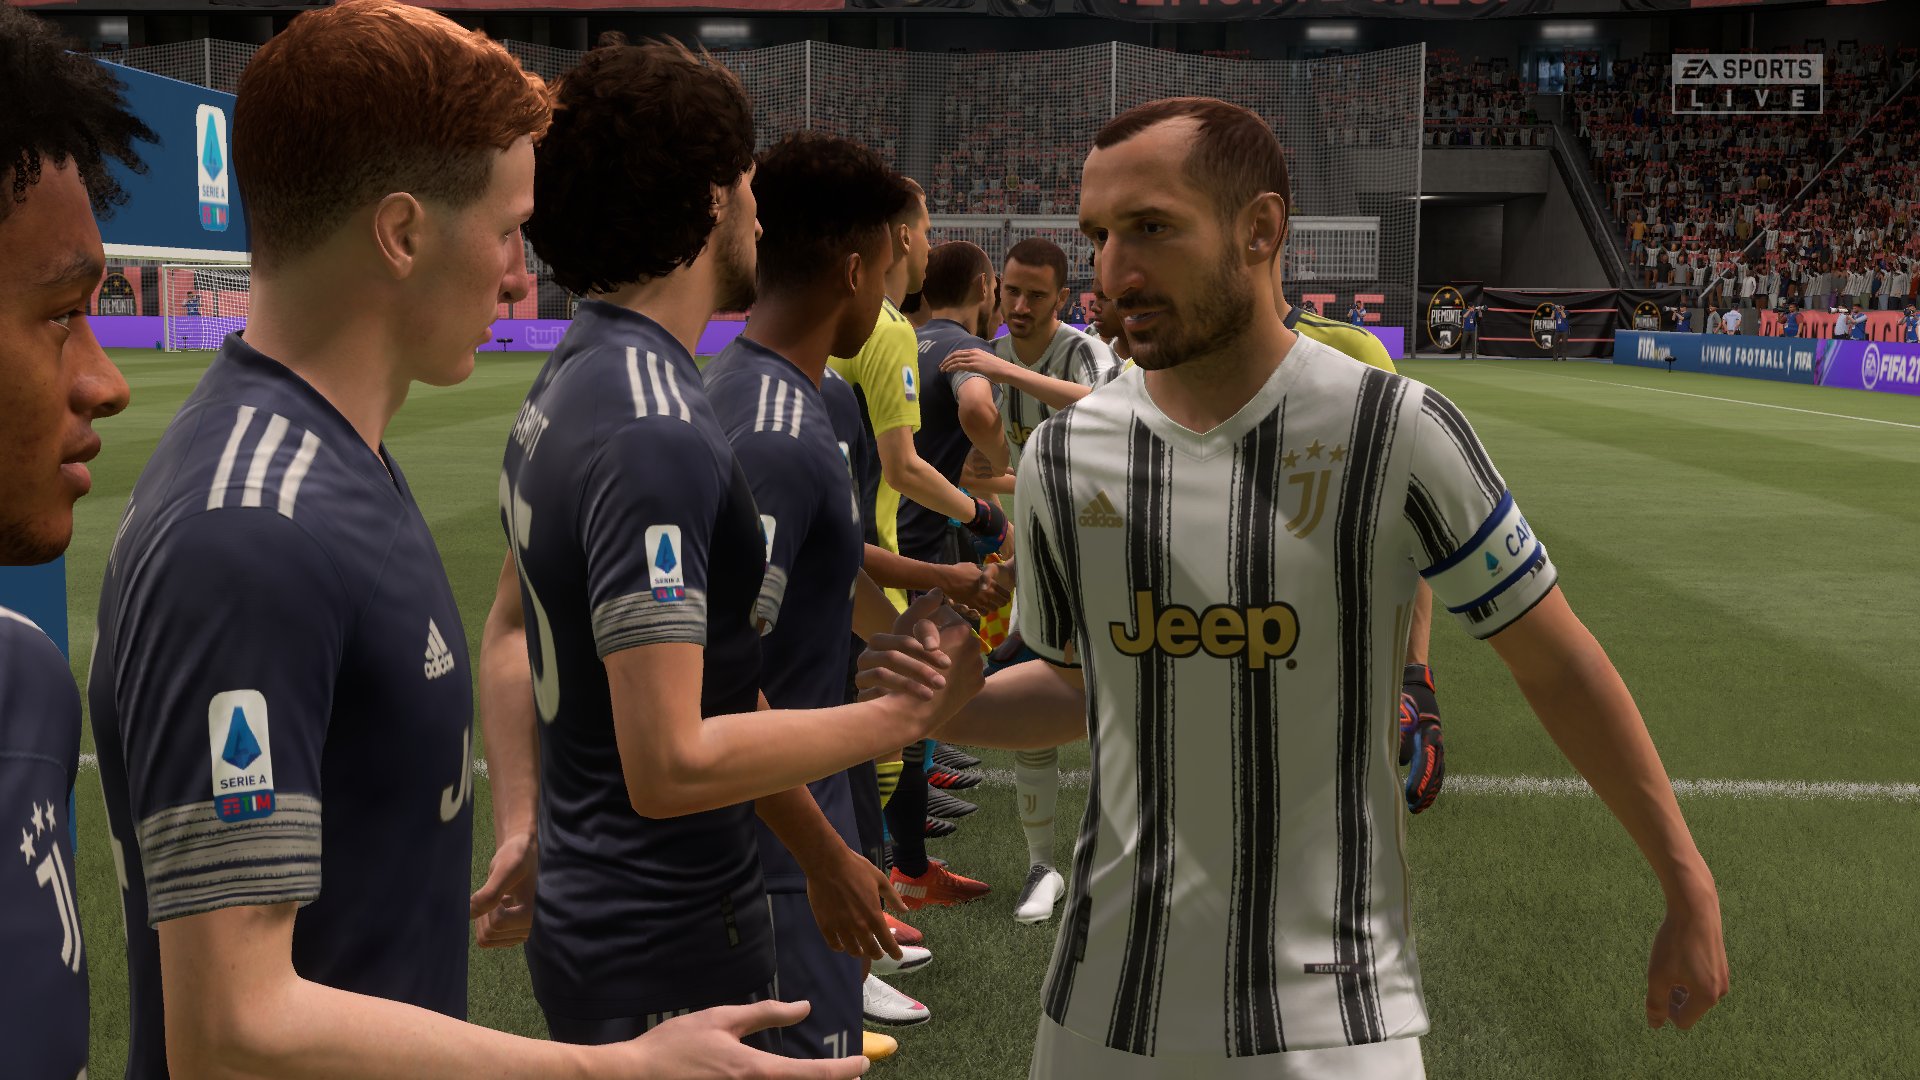 FIFER's FIFA 21 Realism Mod